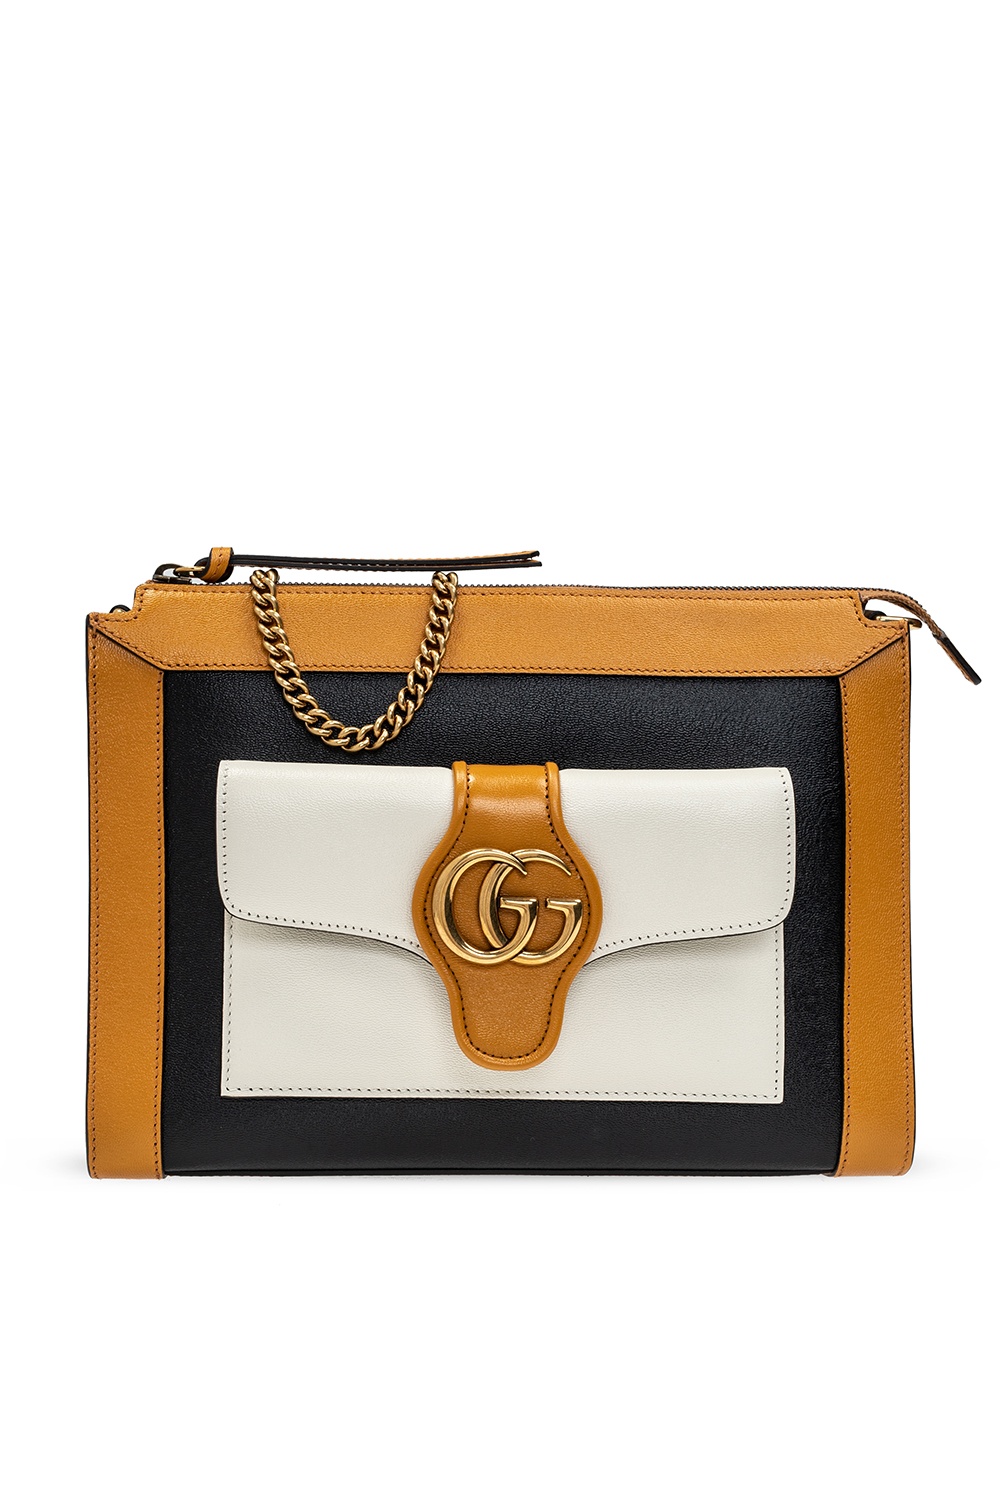 Gucci ‘Double G’ shoulder bag